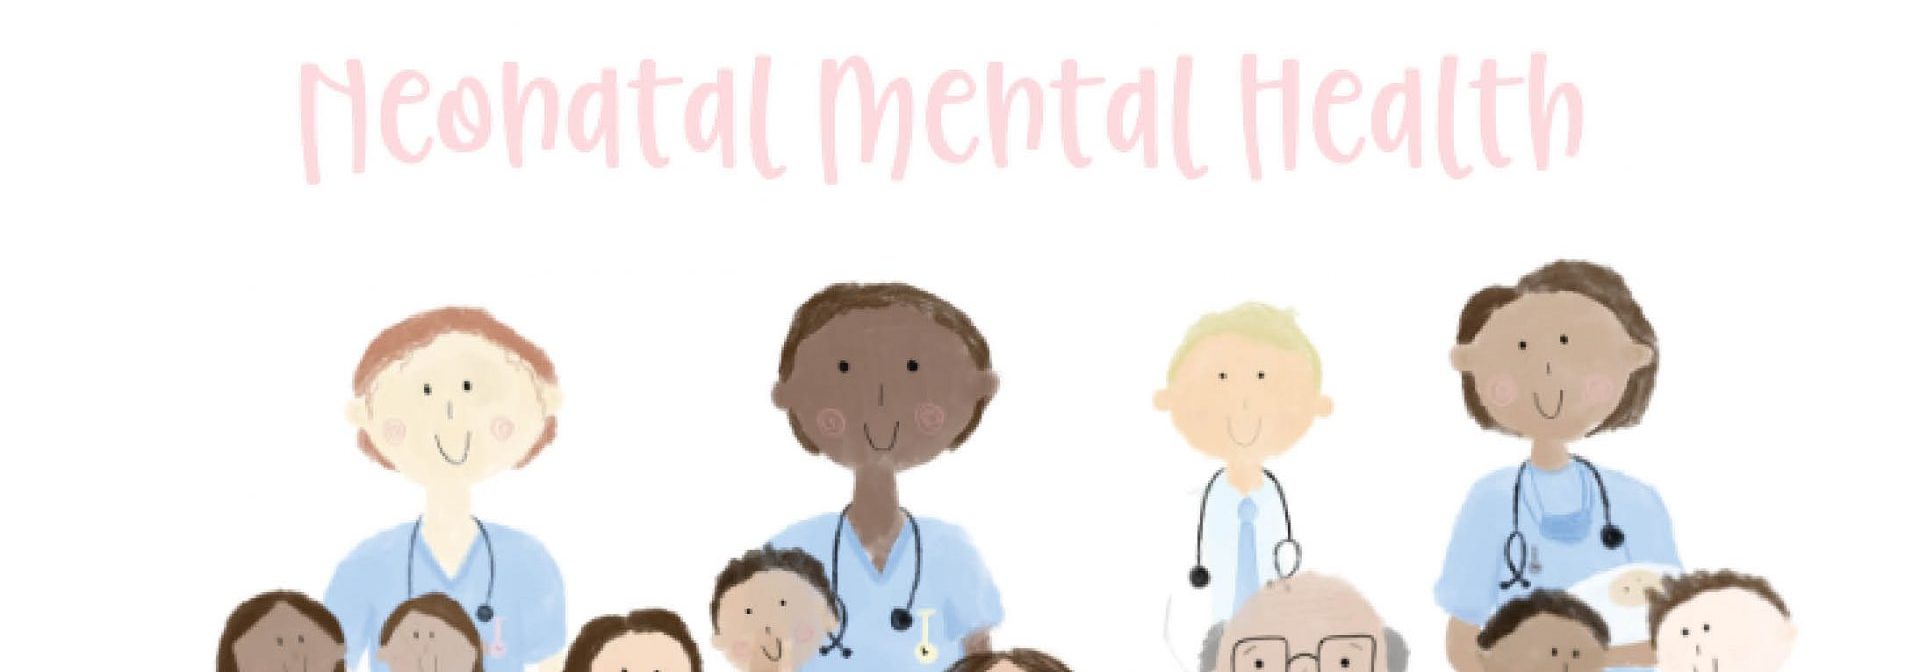 Neonatal mental health awareness week 2019 